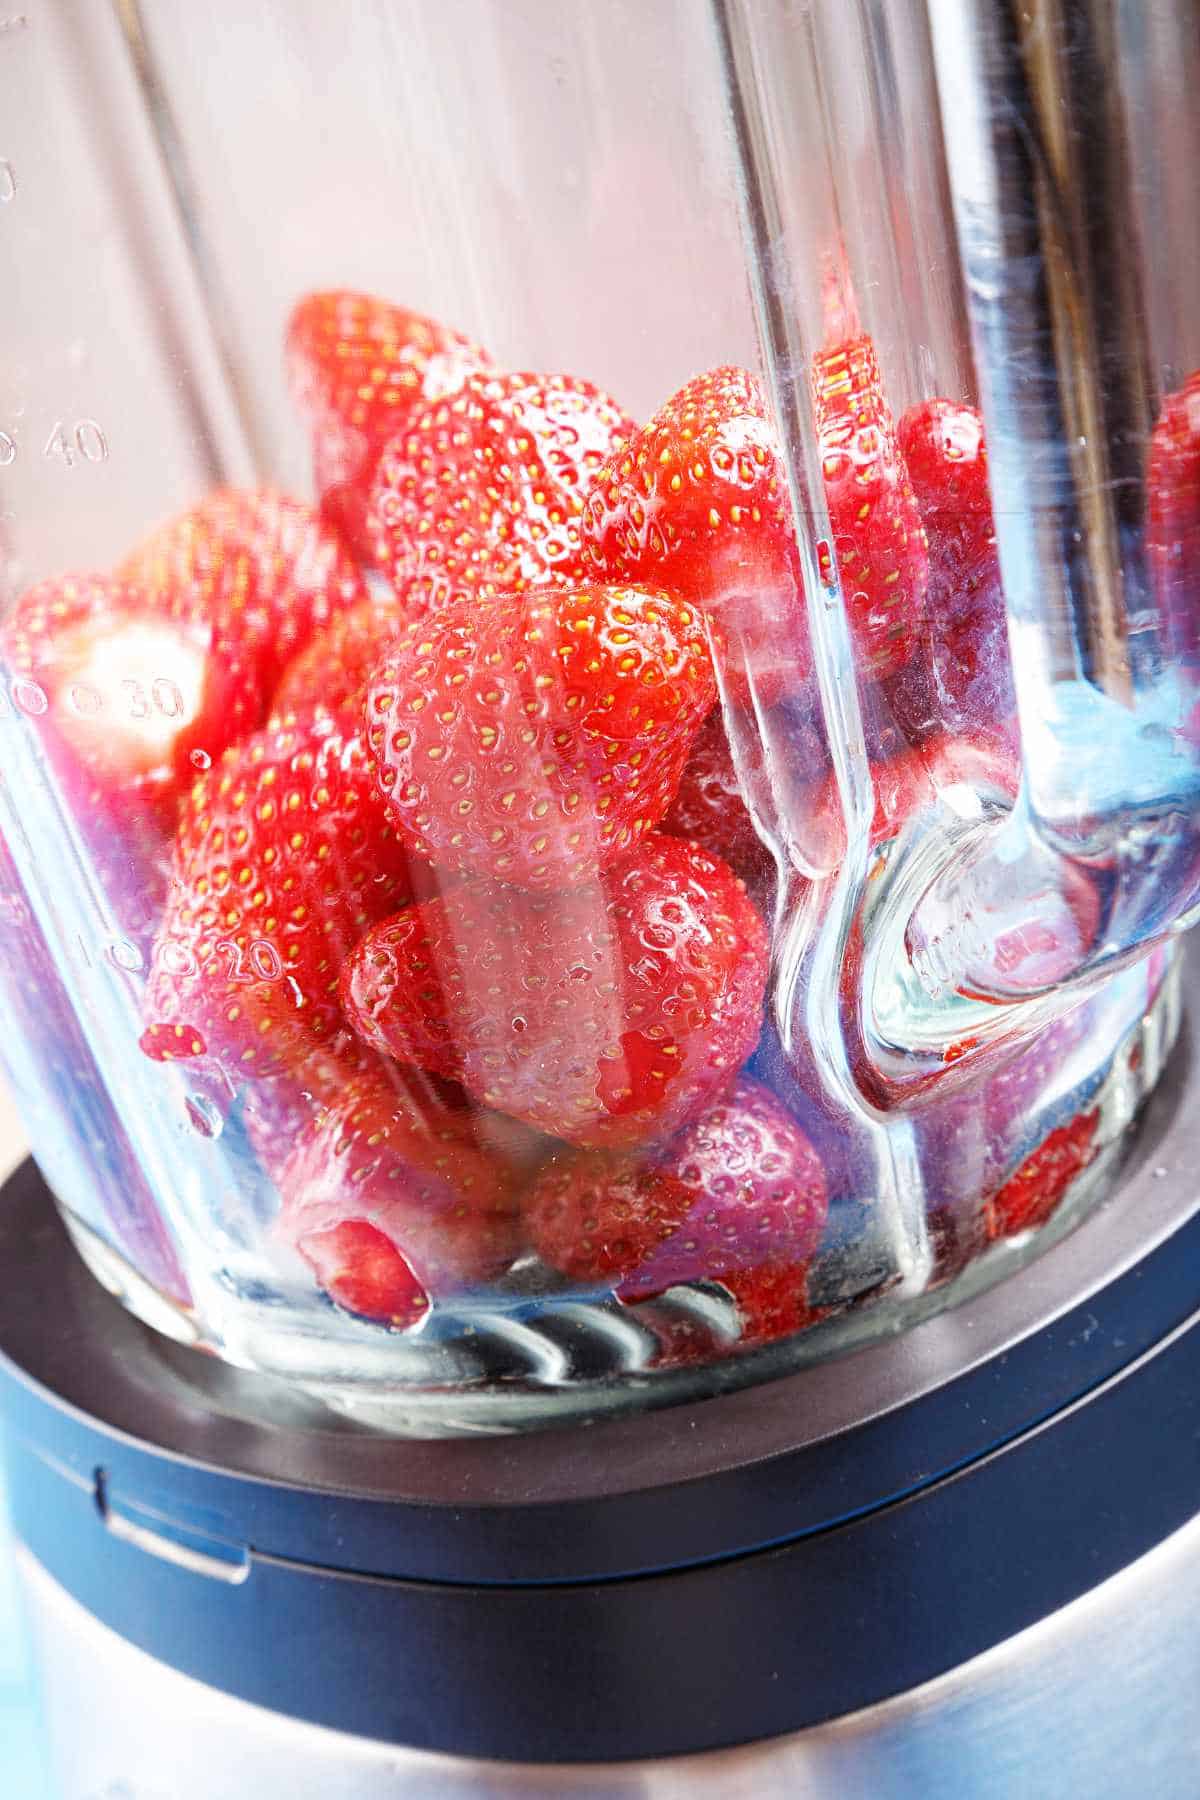 strawberries in a blender.